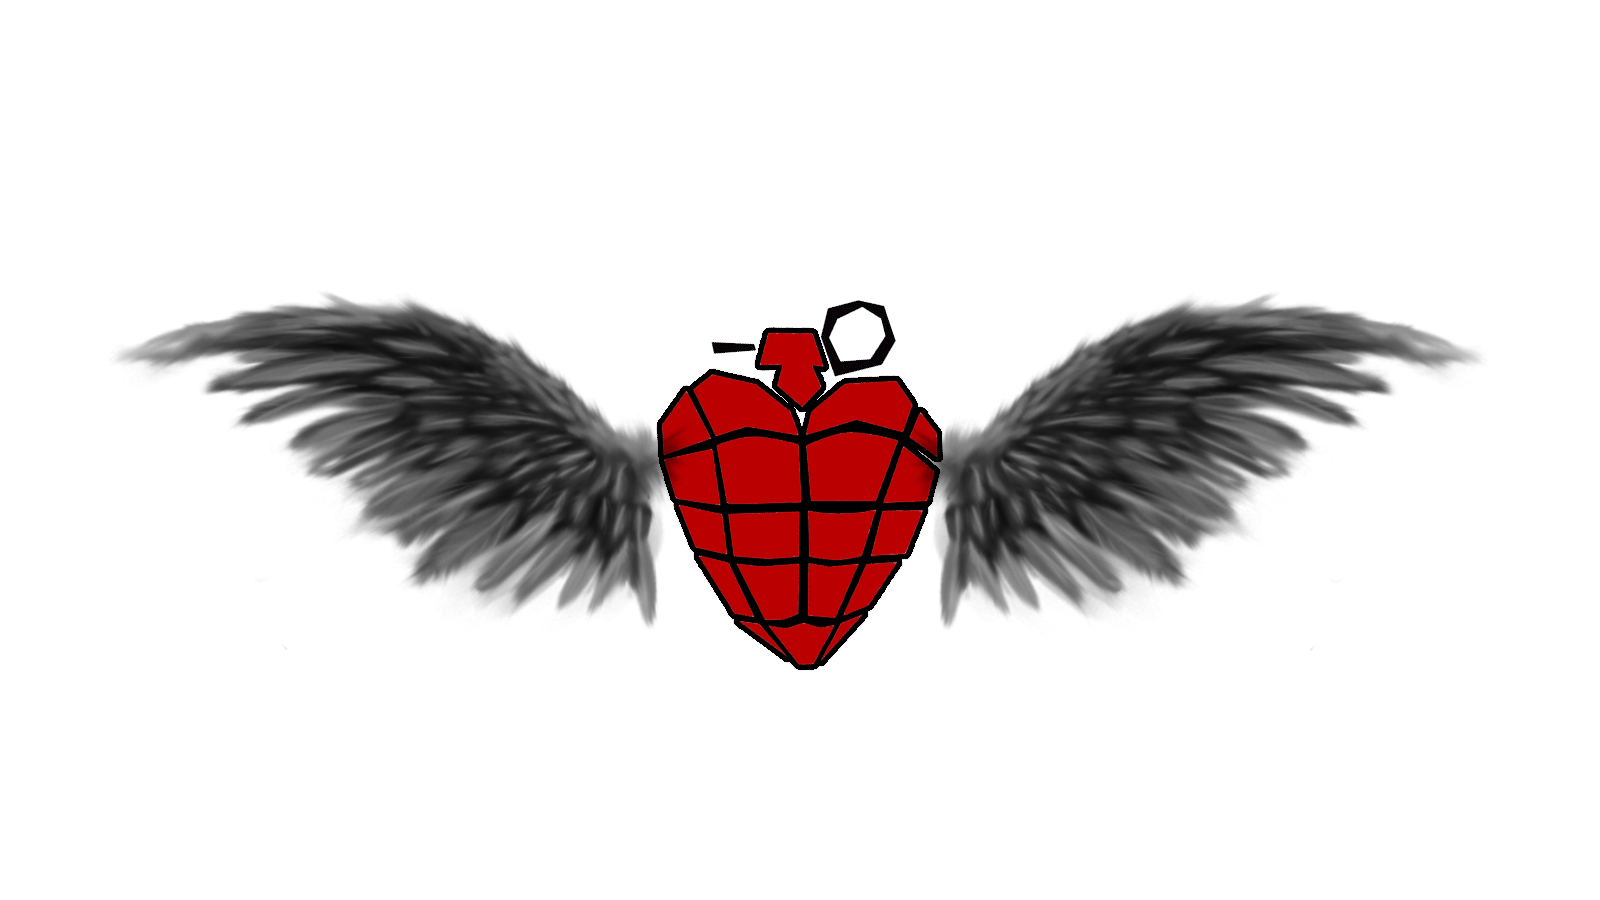 Heart_Grenade_Wings_Background_by_YHSchoir09.jpg